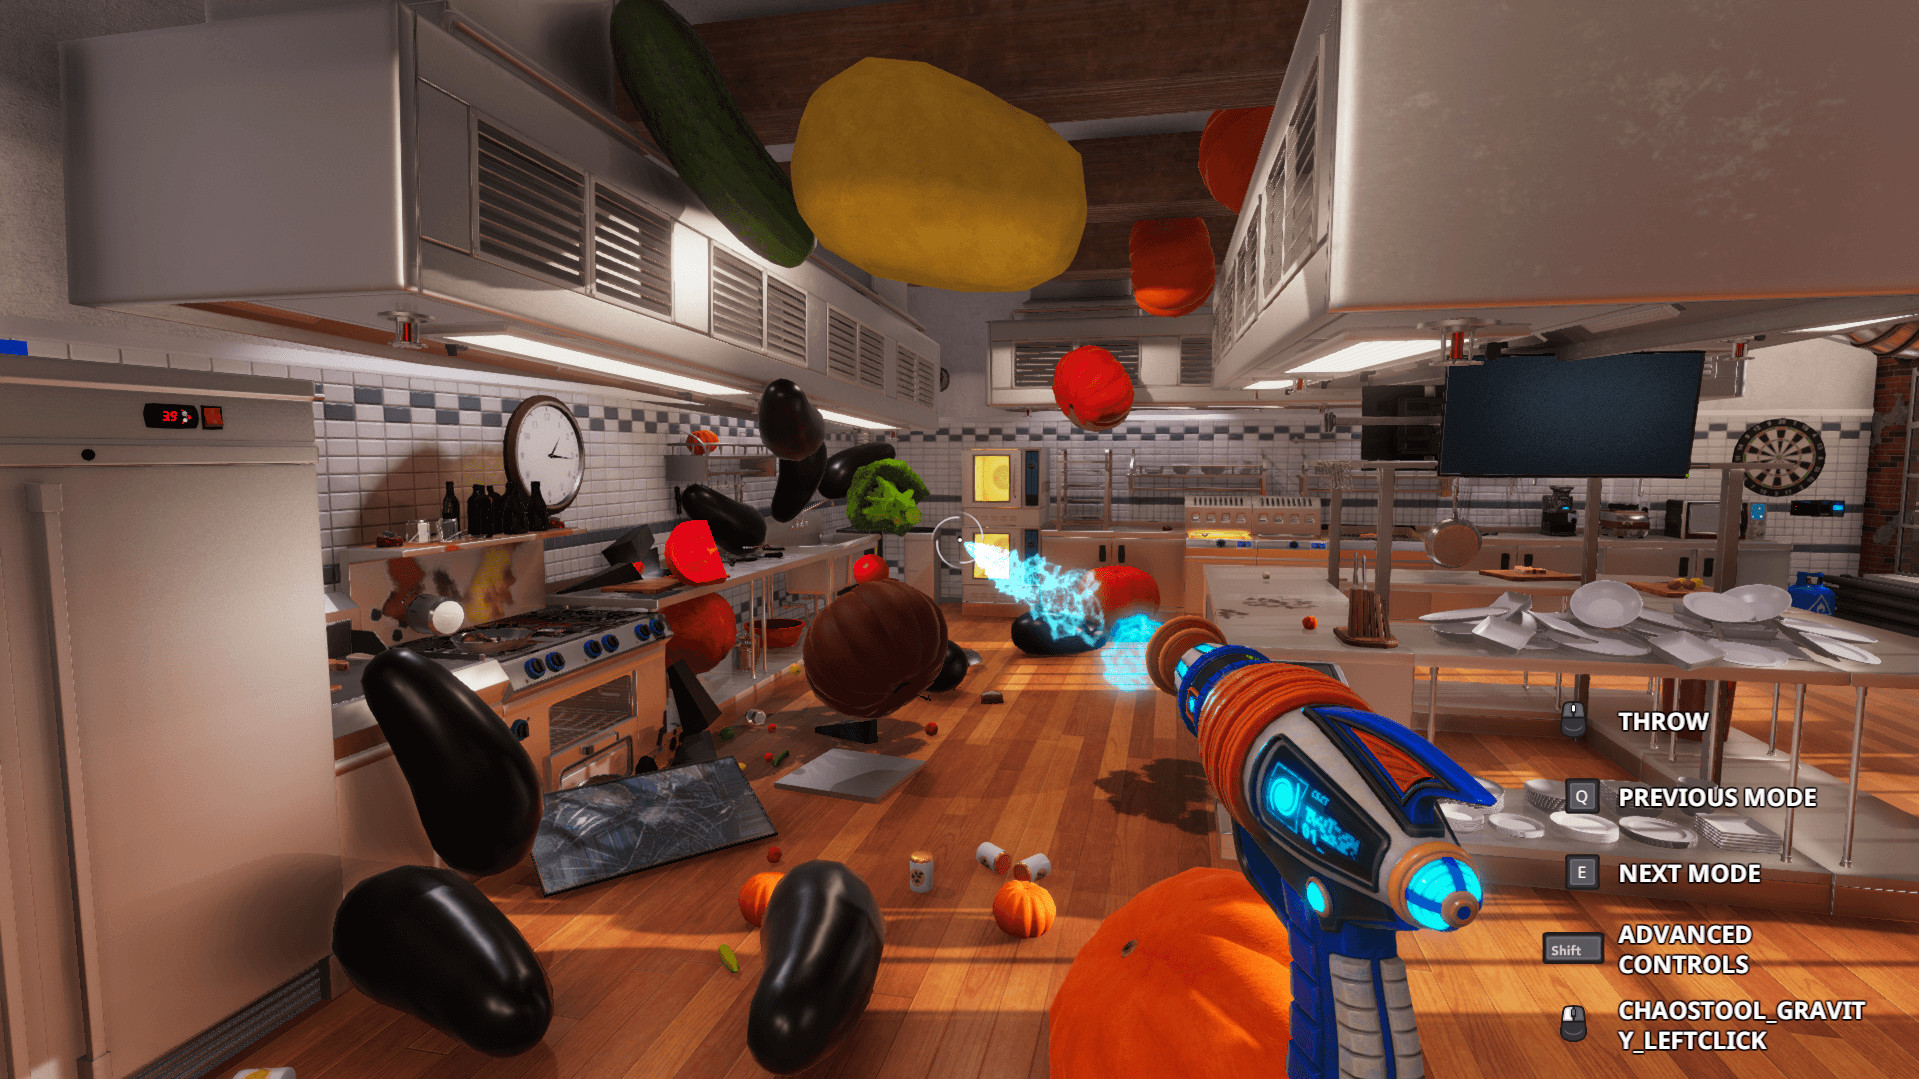 Cooking Simulator - Chaos Tool FREE DLC Featured Screenshot #1